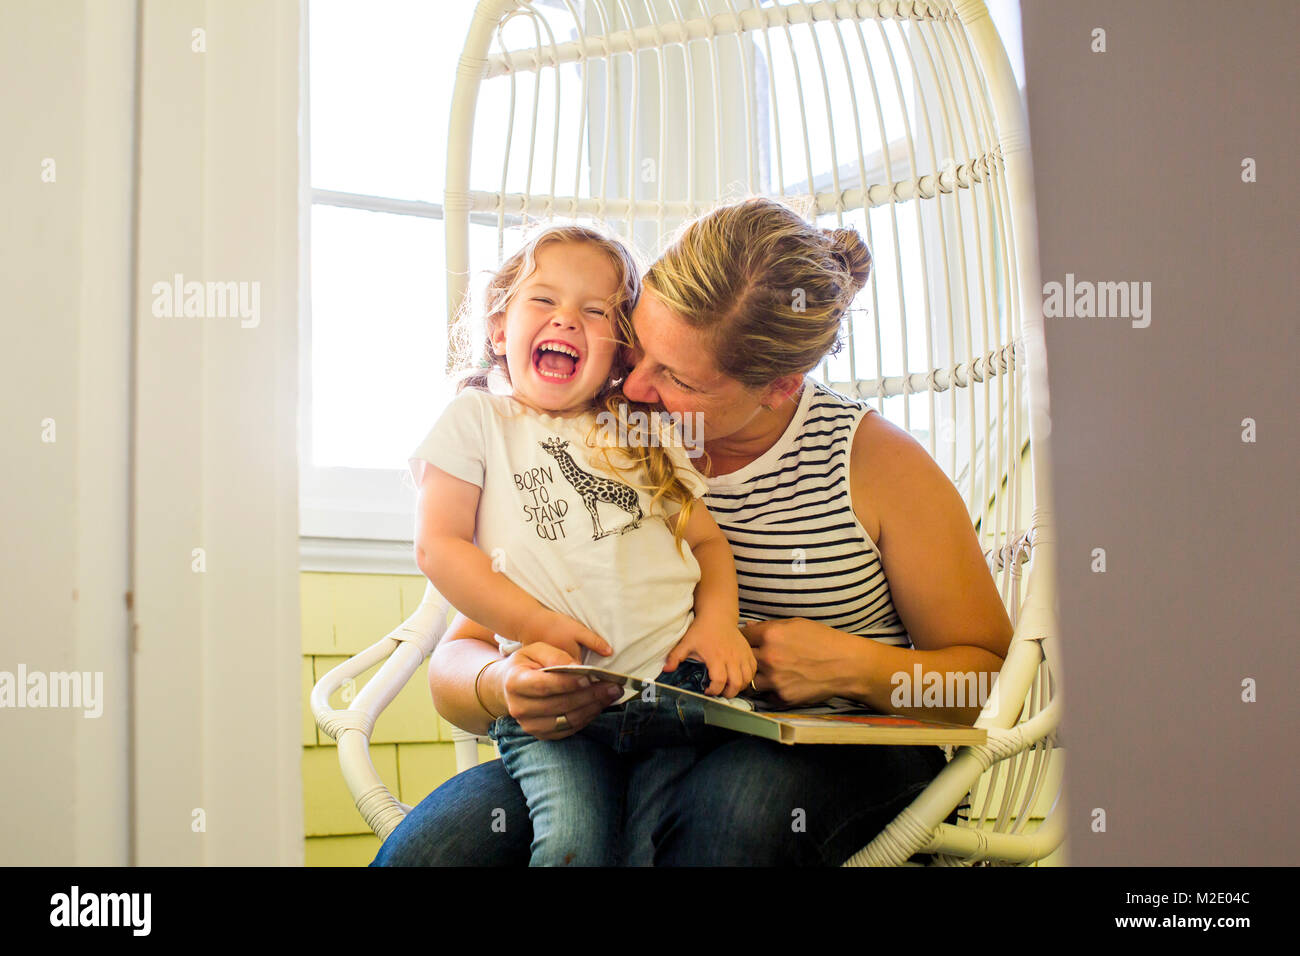 Playful Caucasian mother biting shoulder of daughter reading book Stock Photo